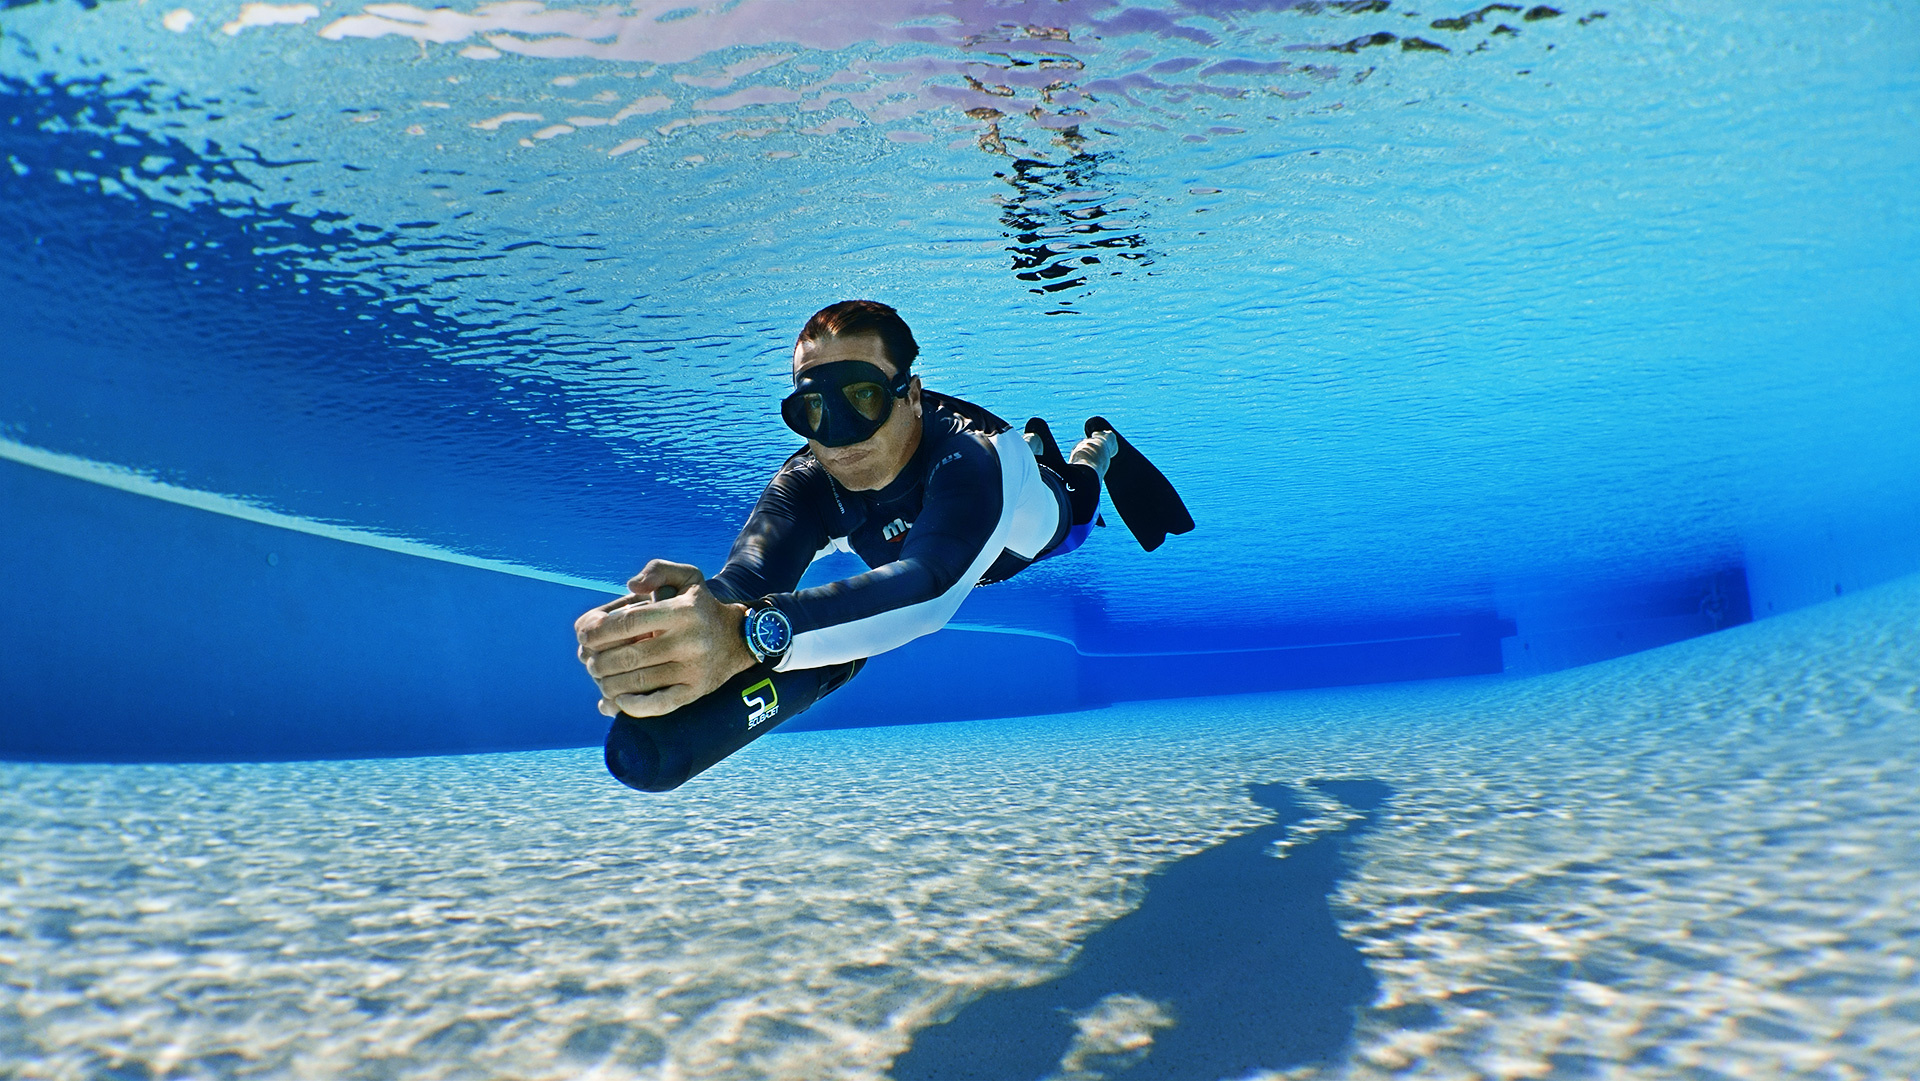 Snorkeling: Scubajet, Water jet system, Underwater scooter, Diving equipment, Swimming pool training. 1920x1090 HD Wallpaper.